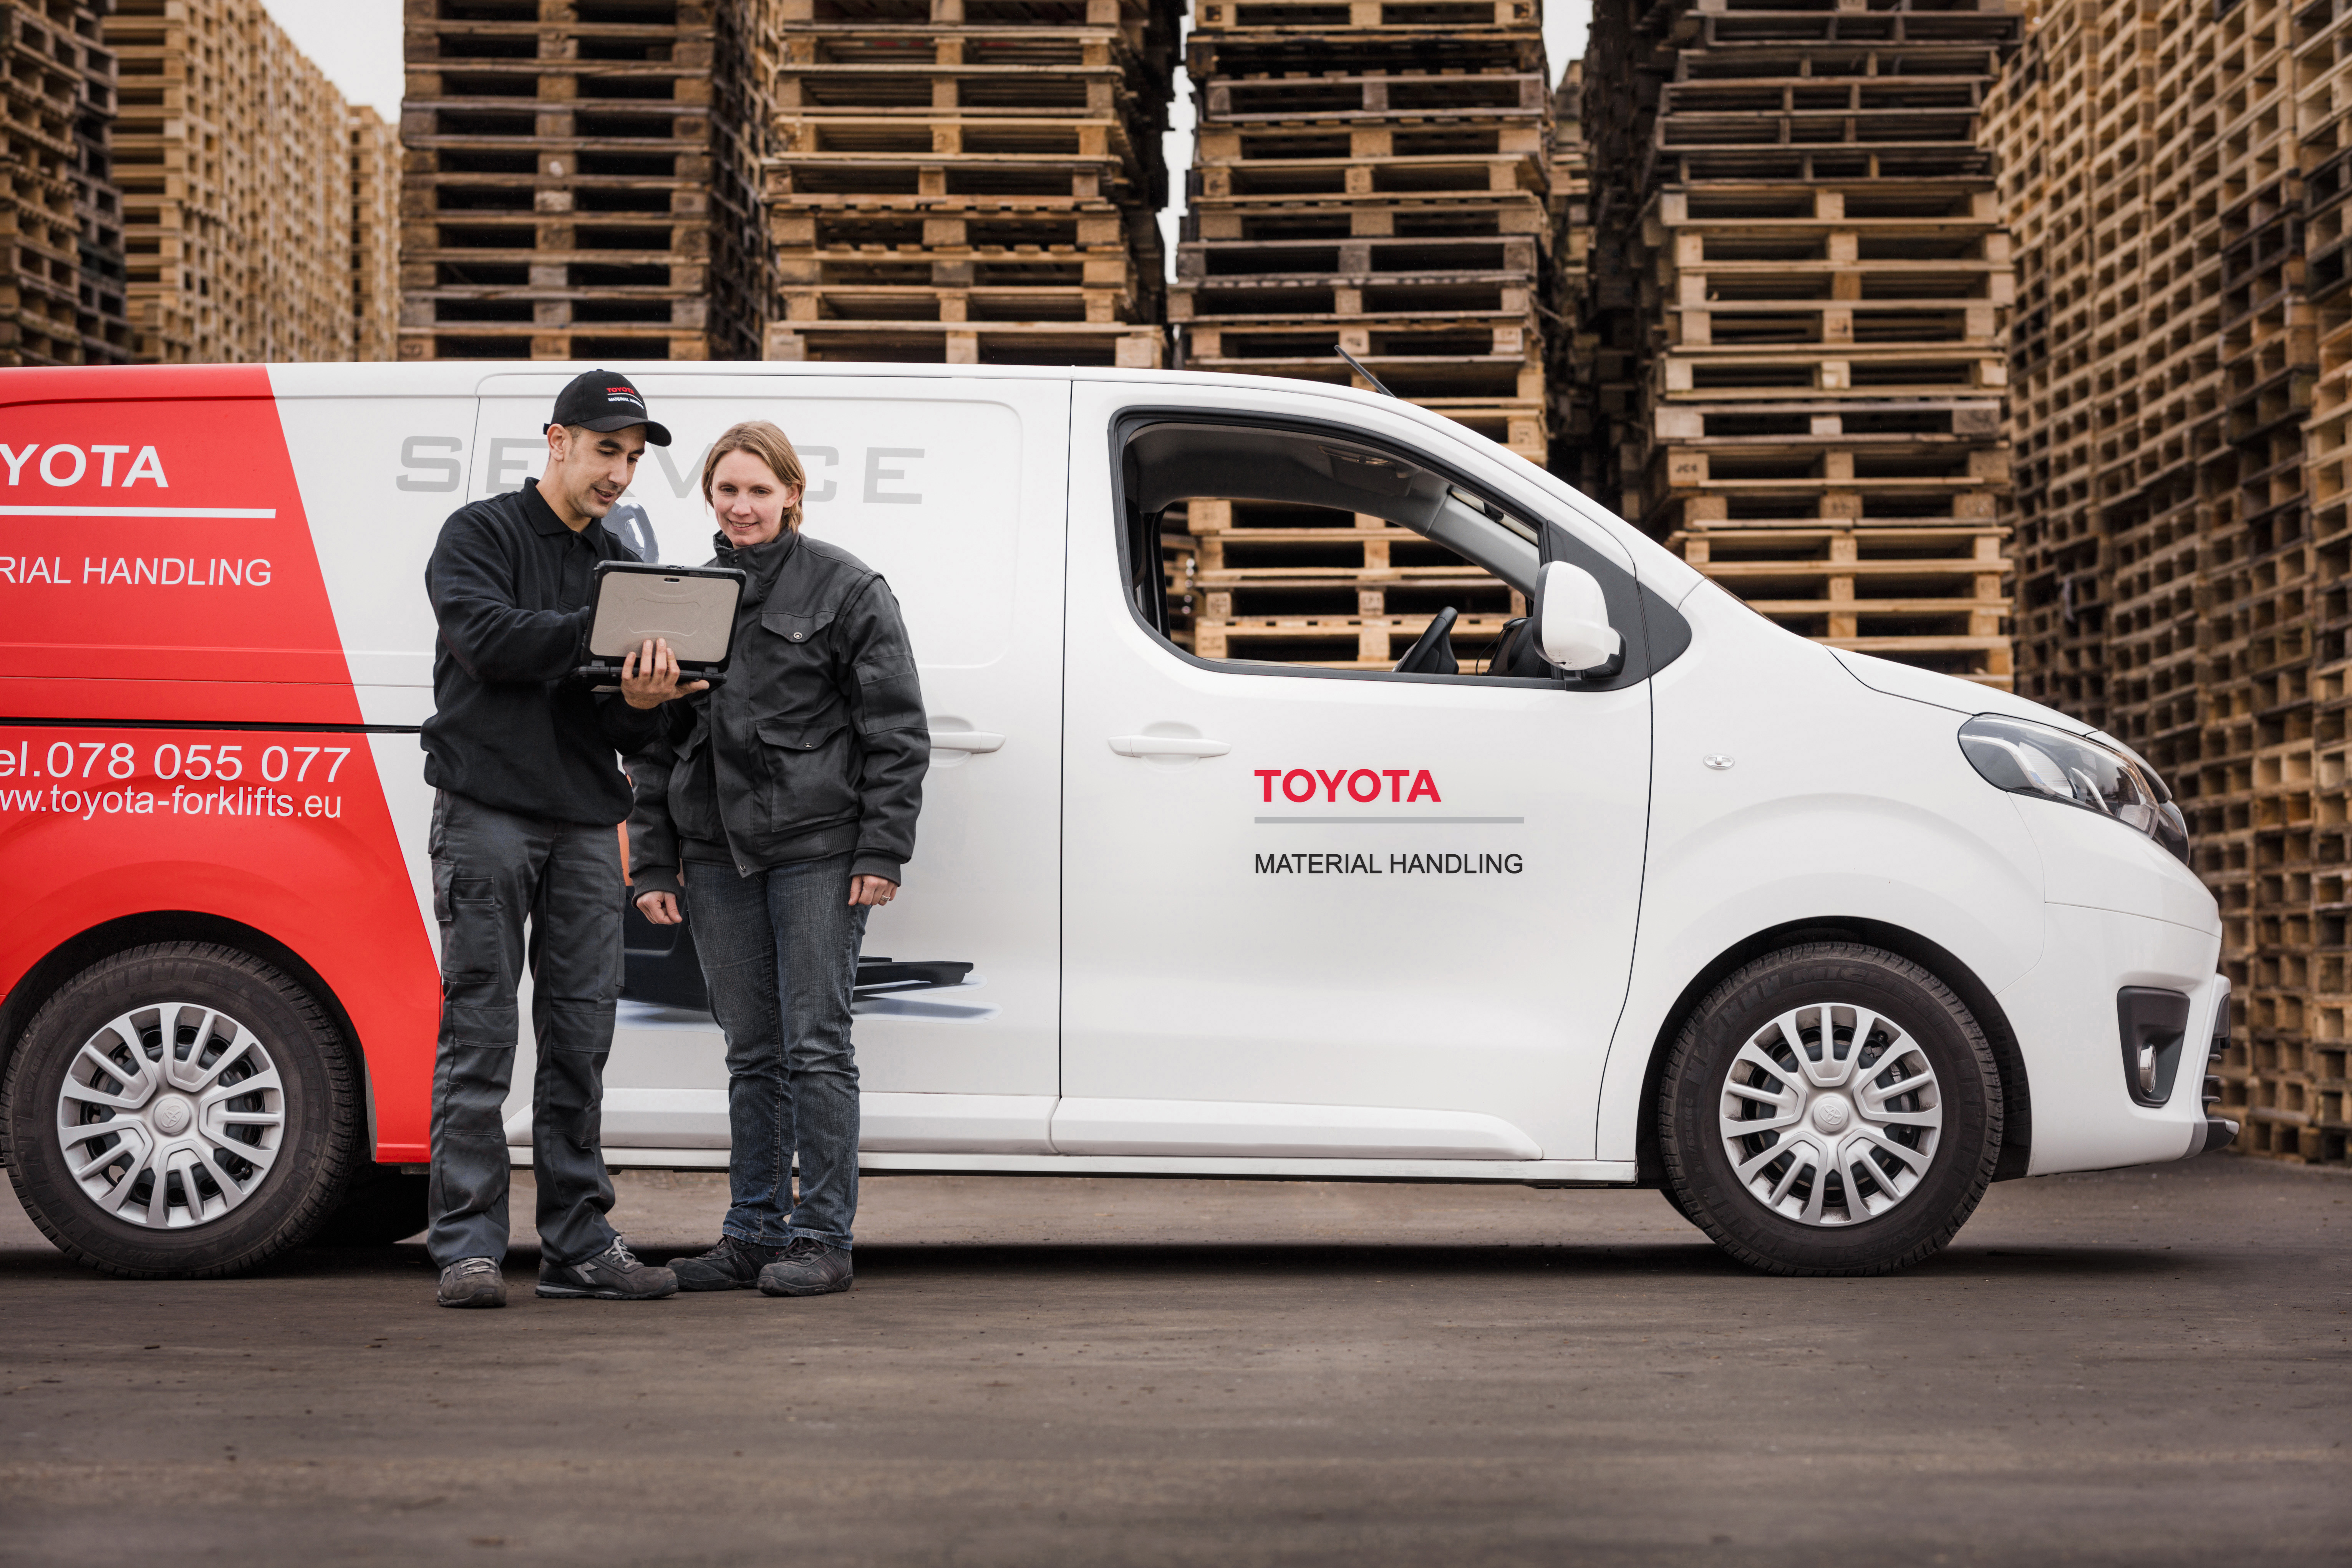 Toyota service technician with van